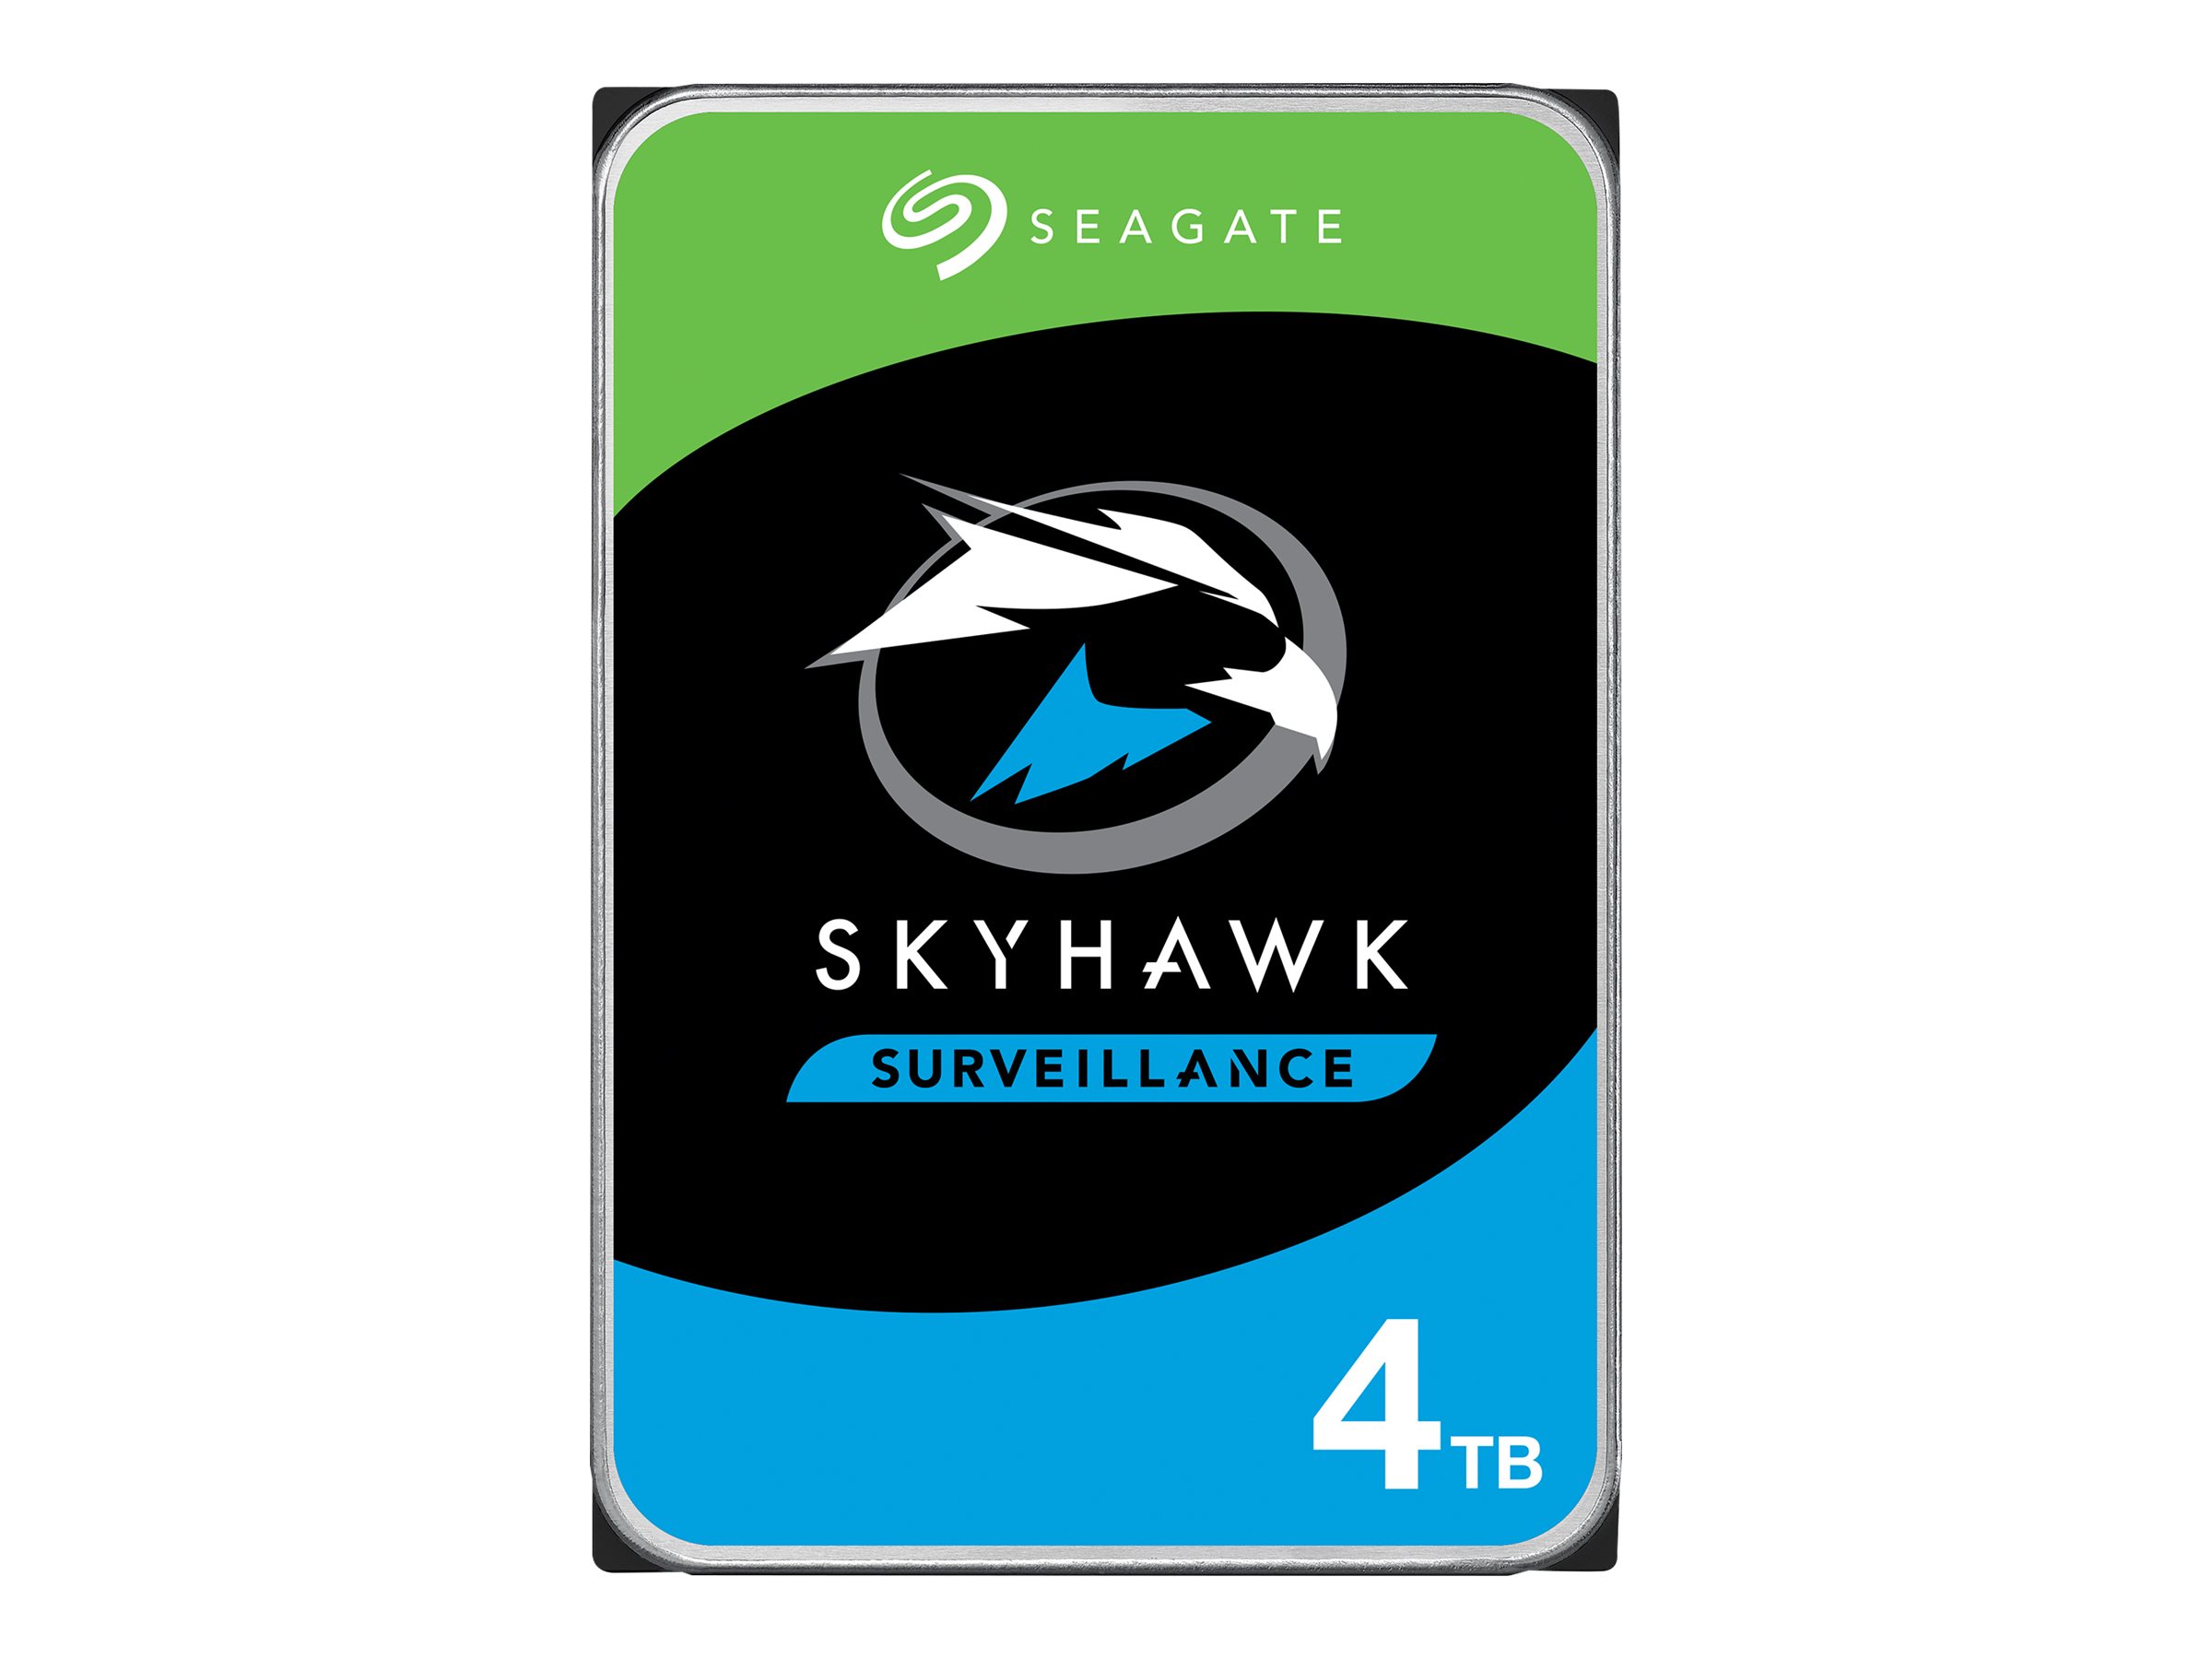 SEAGATE SKYHAWK 4TB SURVEILLANCE 3.5IN (ST4000VX016)